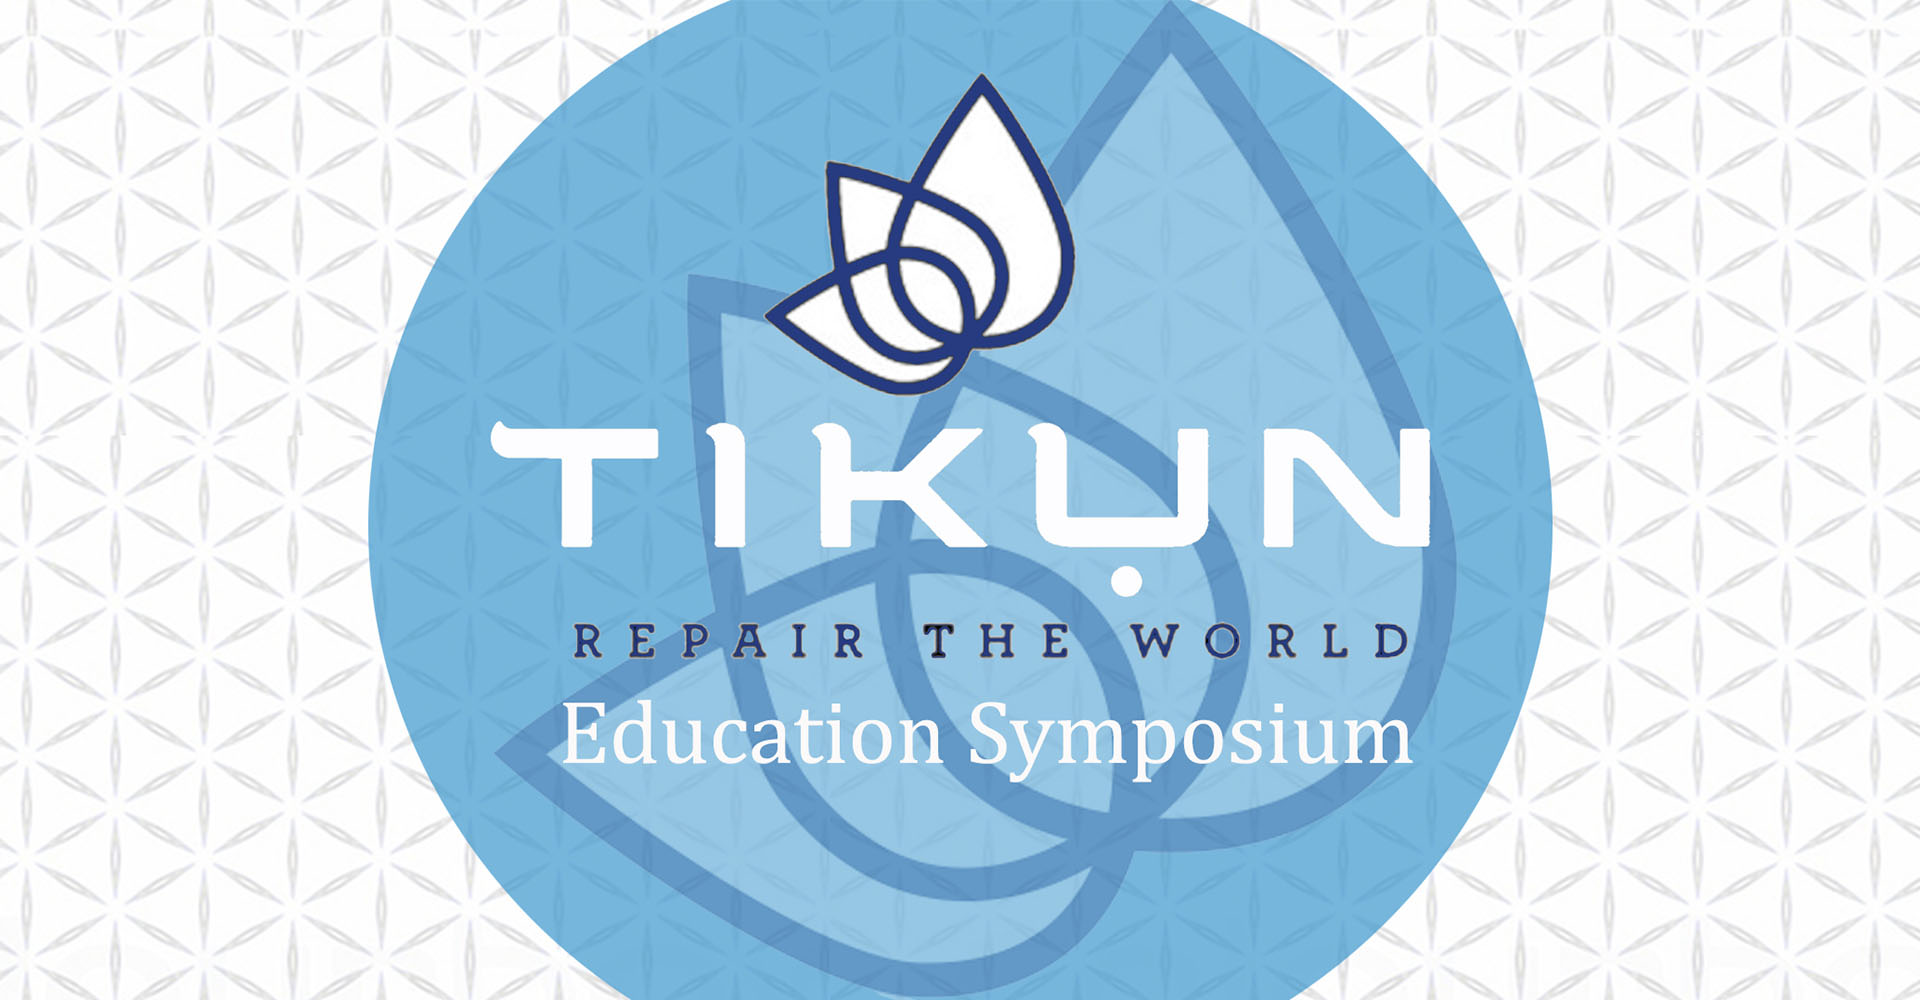 Tikun Olam Education Symposium